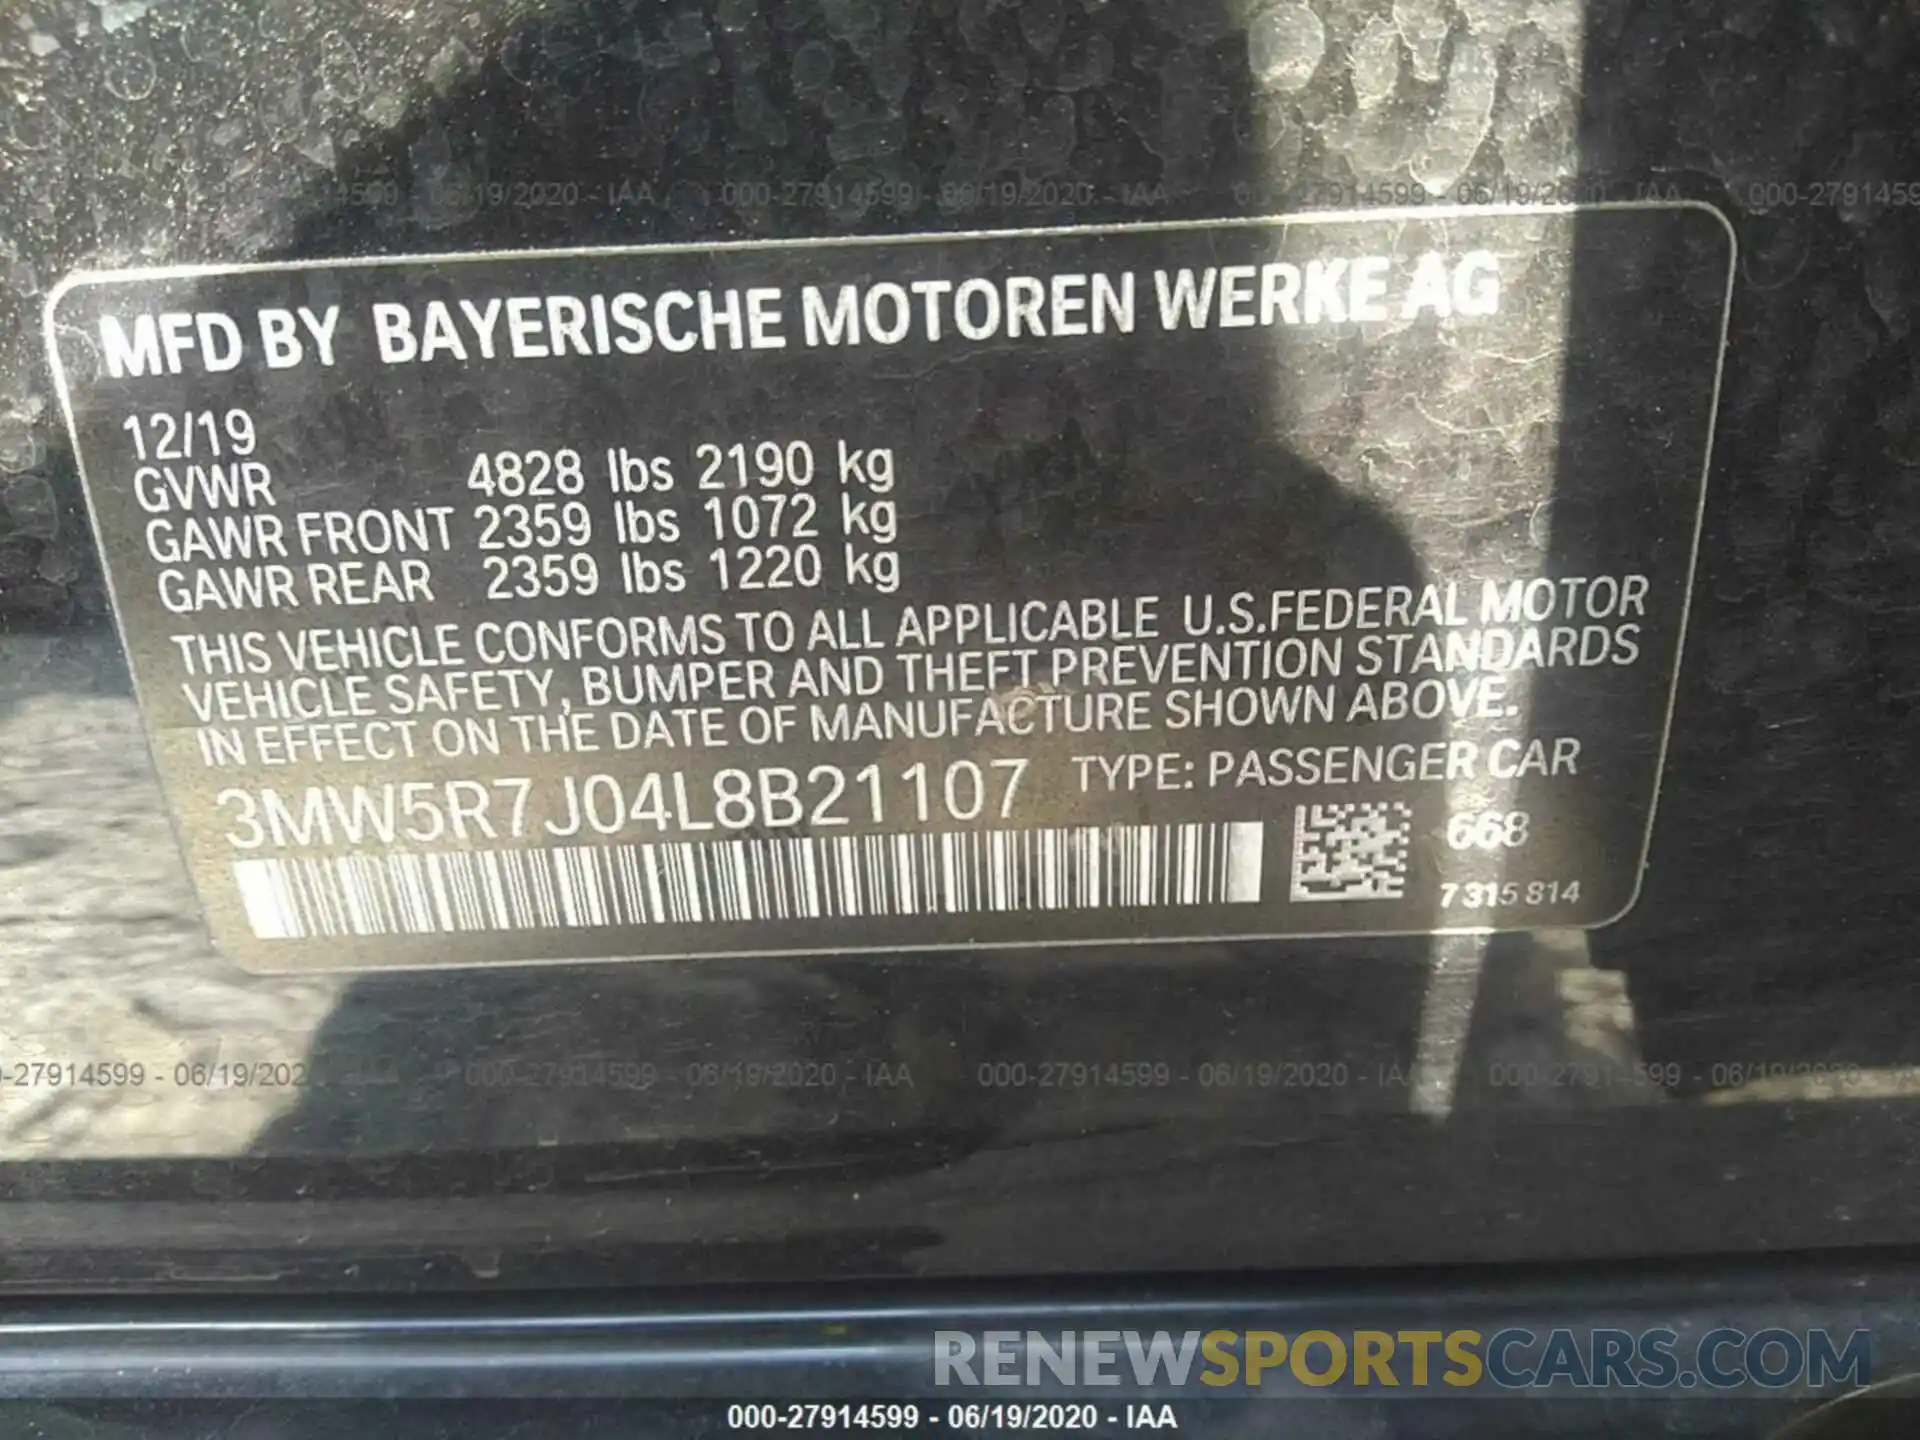 9 Photograph of a damaged car 3MW5R7J04L8B21107 BMW 330XI 2020